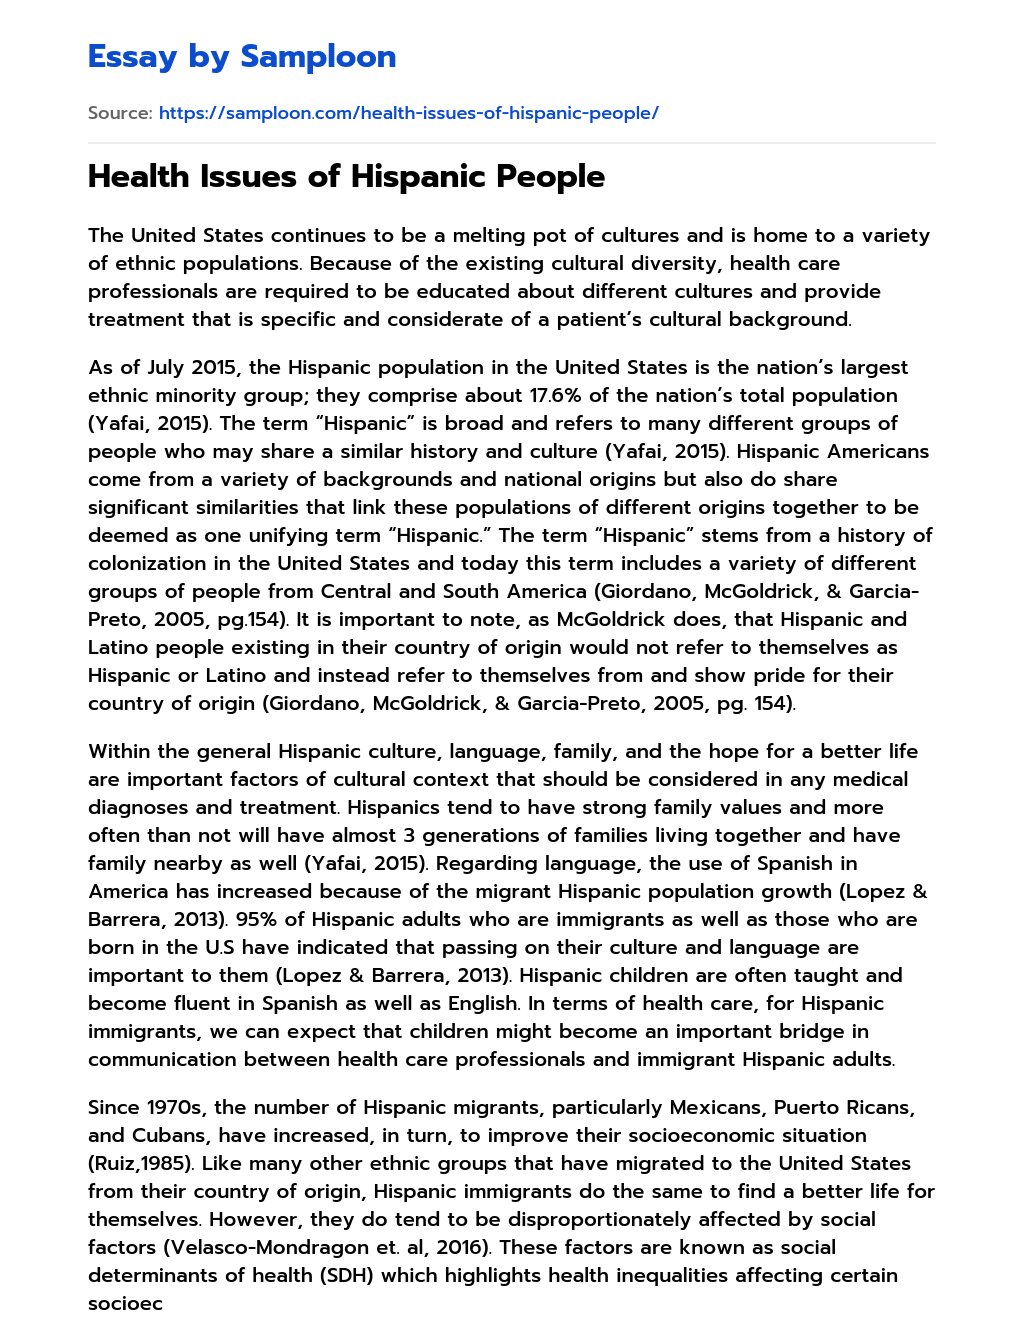 Health Issues of Hispanic People essay